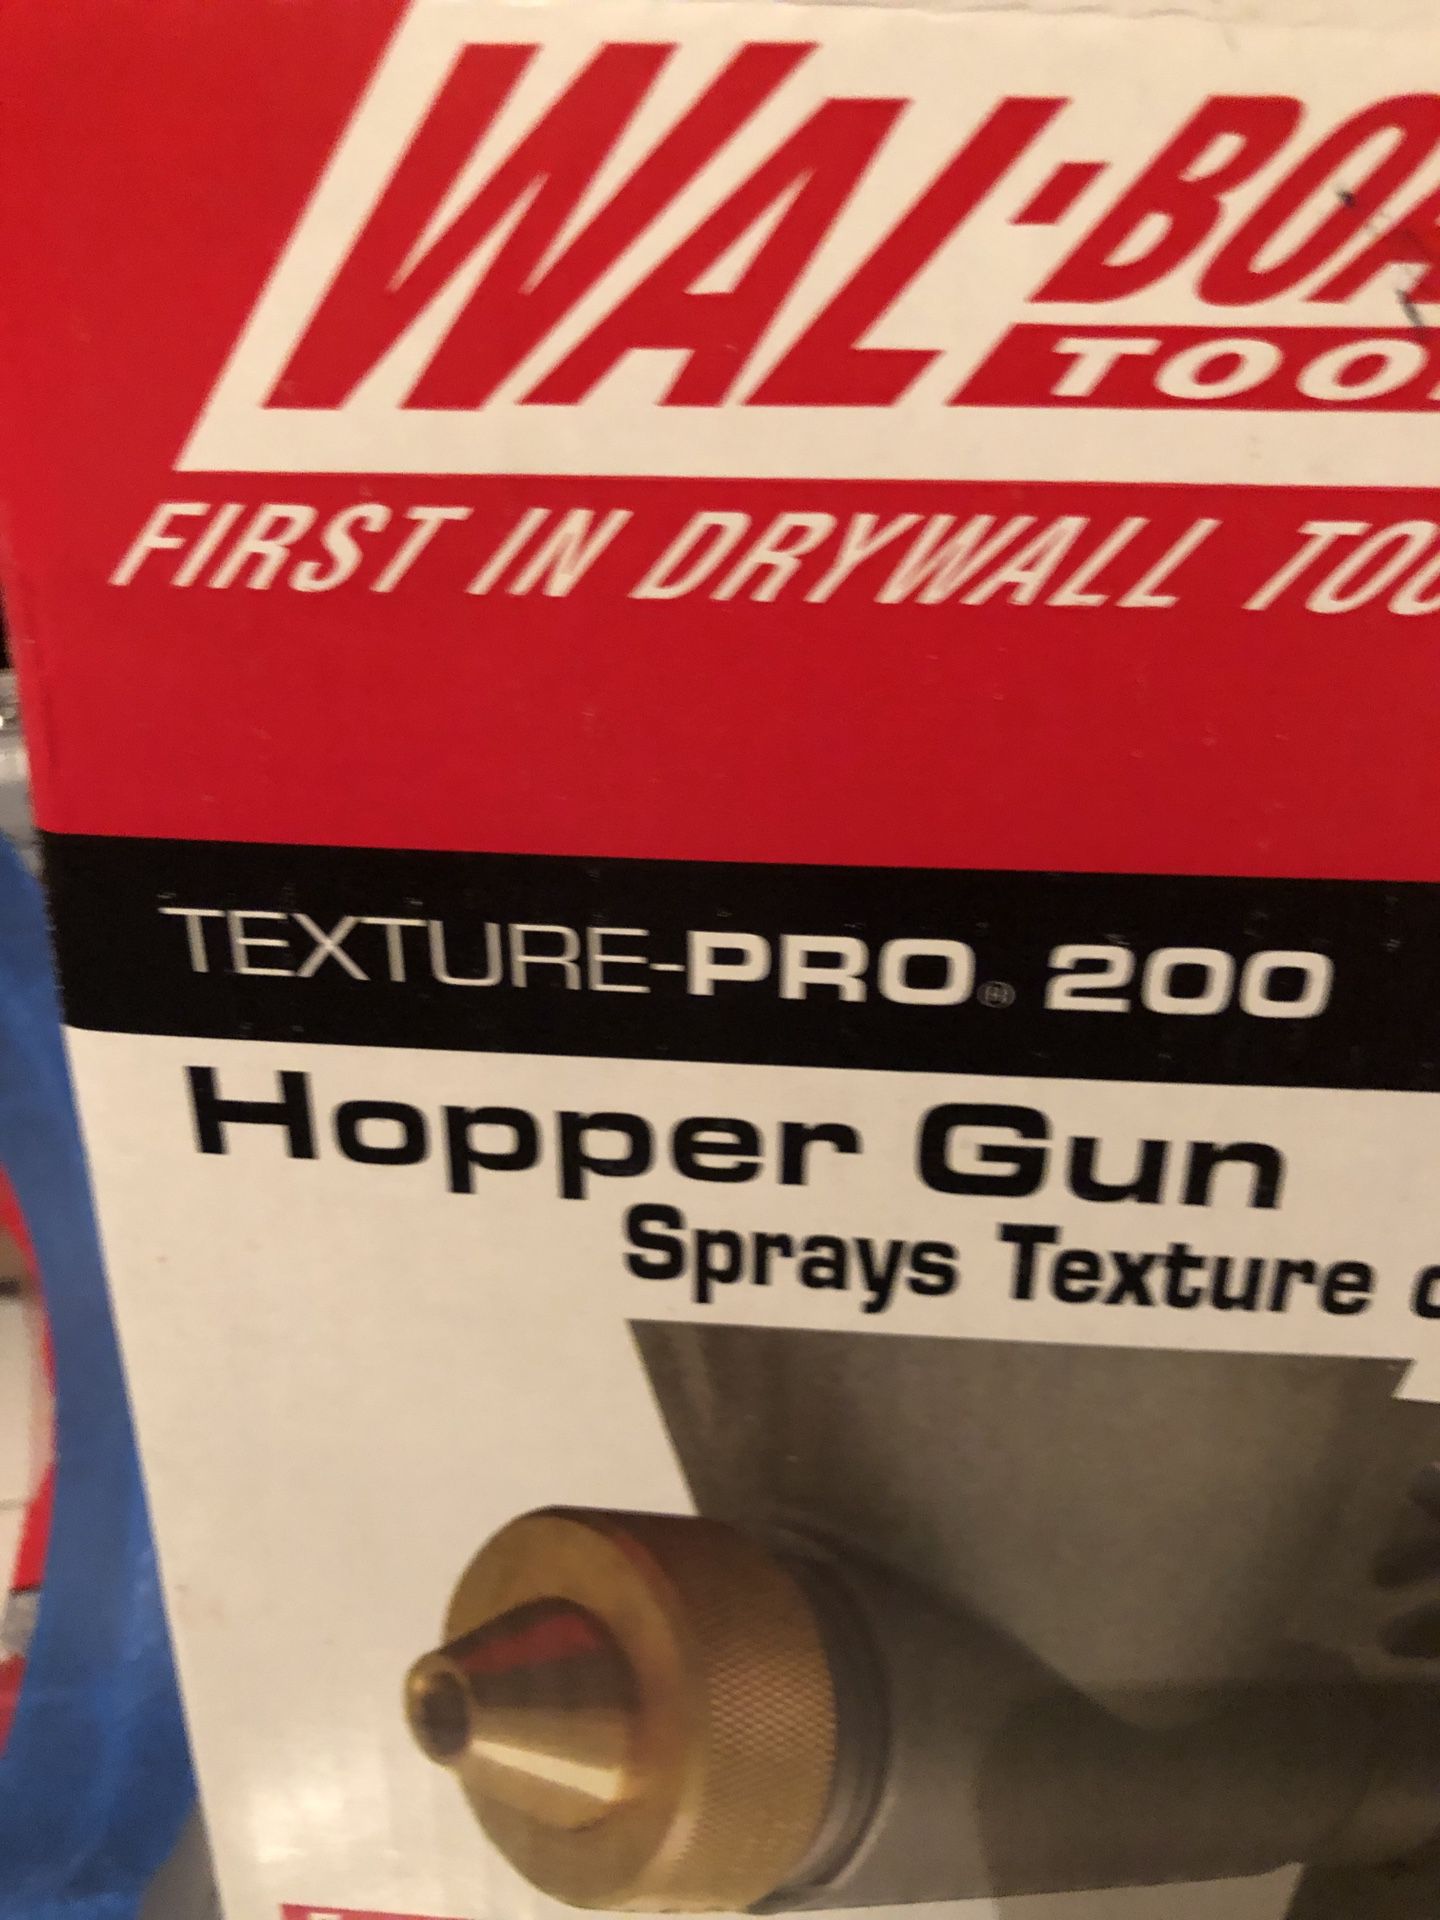 Wal-Board Texture-Pro 200 Drywall Hopper Gun